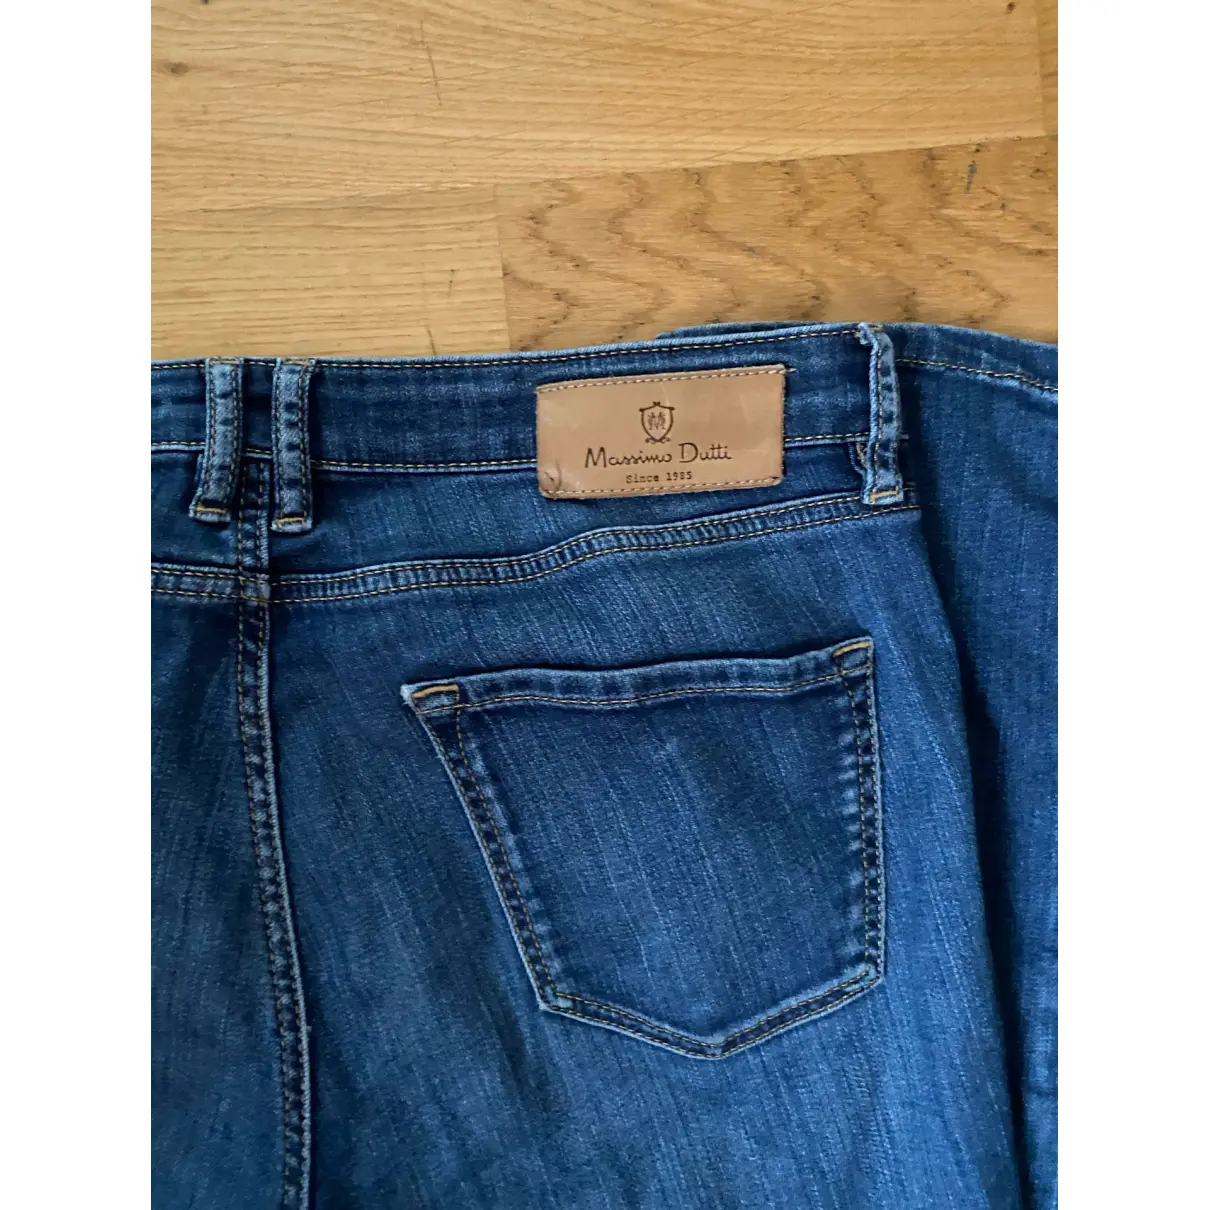 Buy Massimo Dutti Slim jeans online